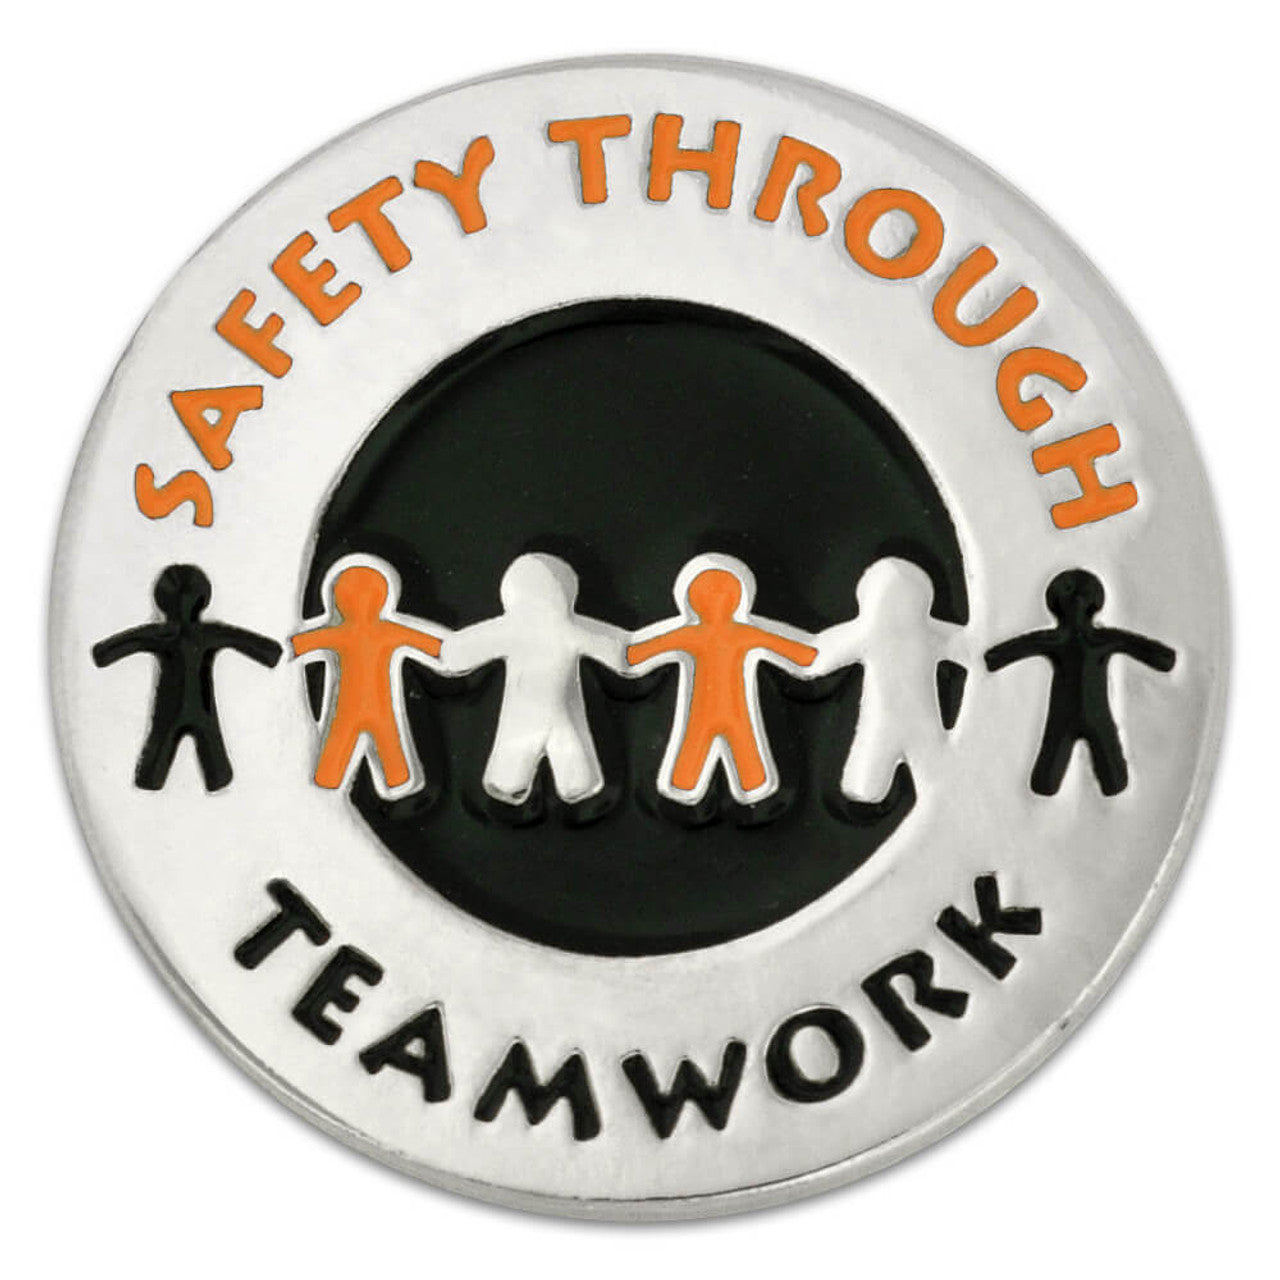 Safety Through Teamwork Pin